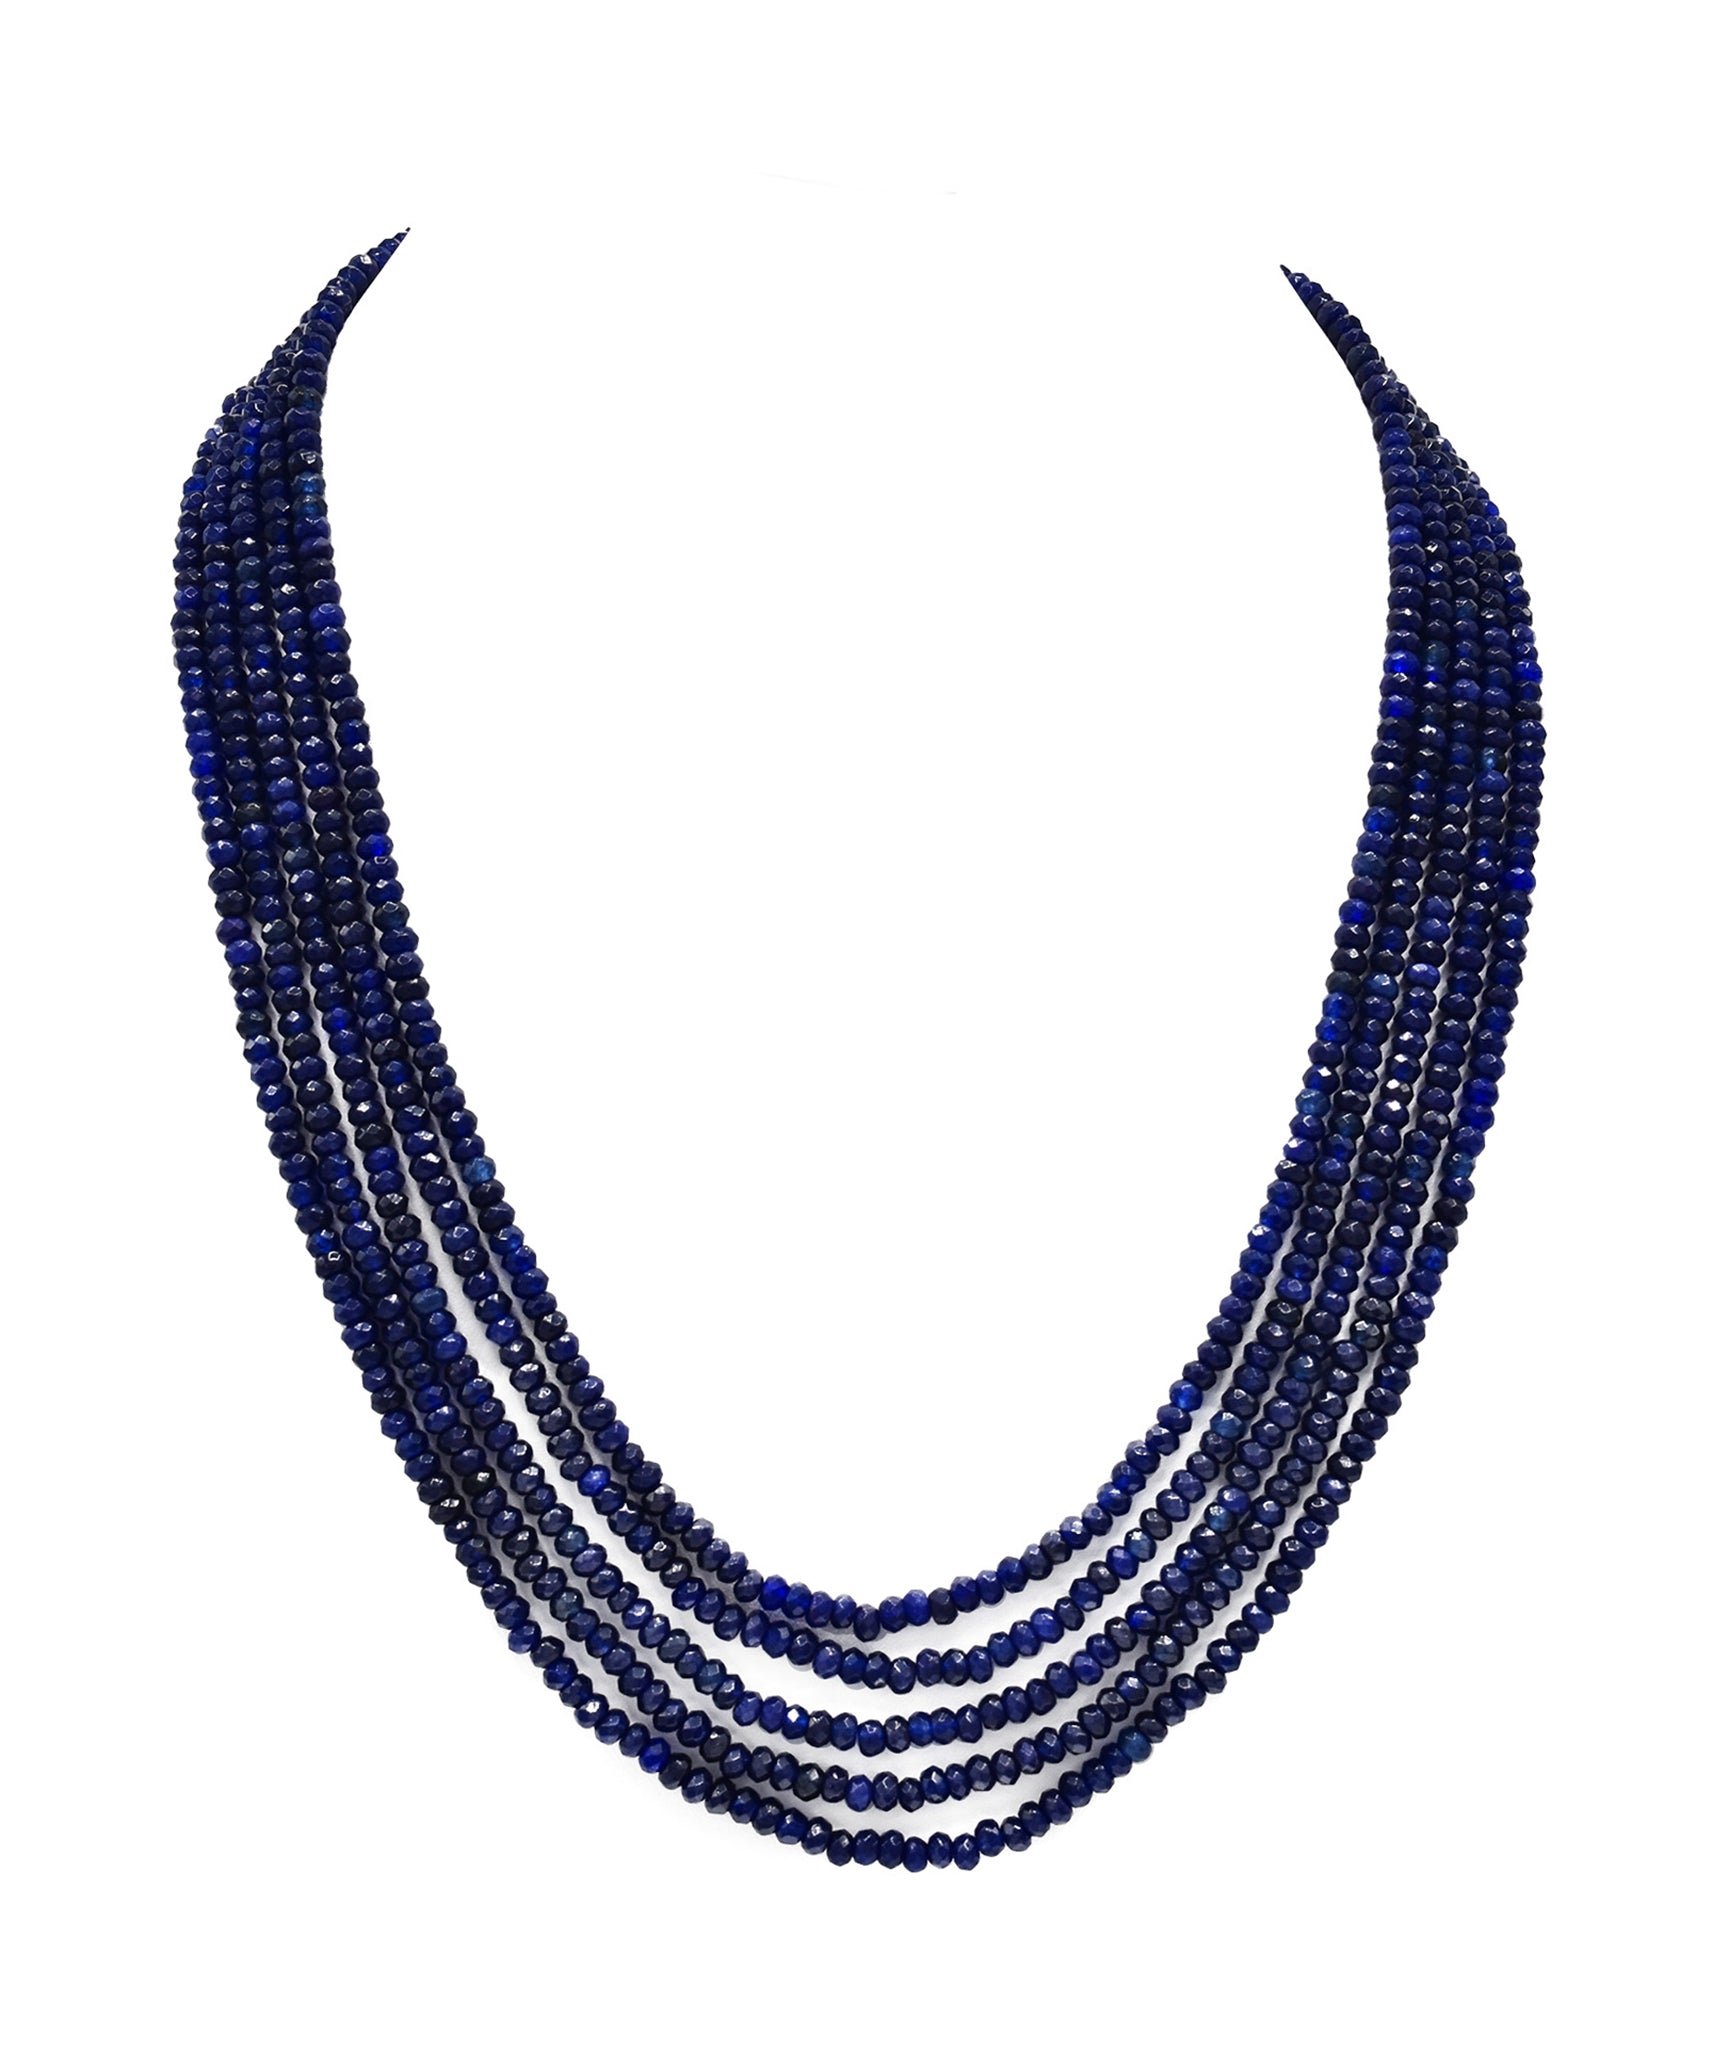 Nino Navy Blue Bead Necklace - The Pashm